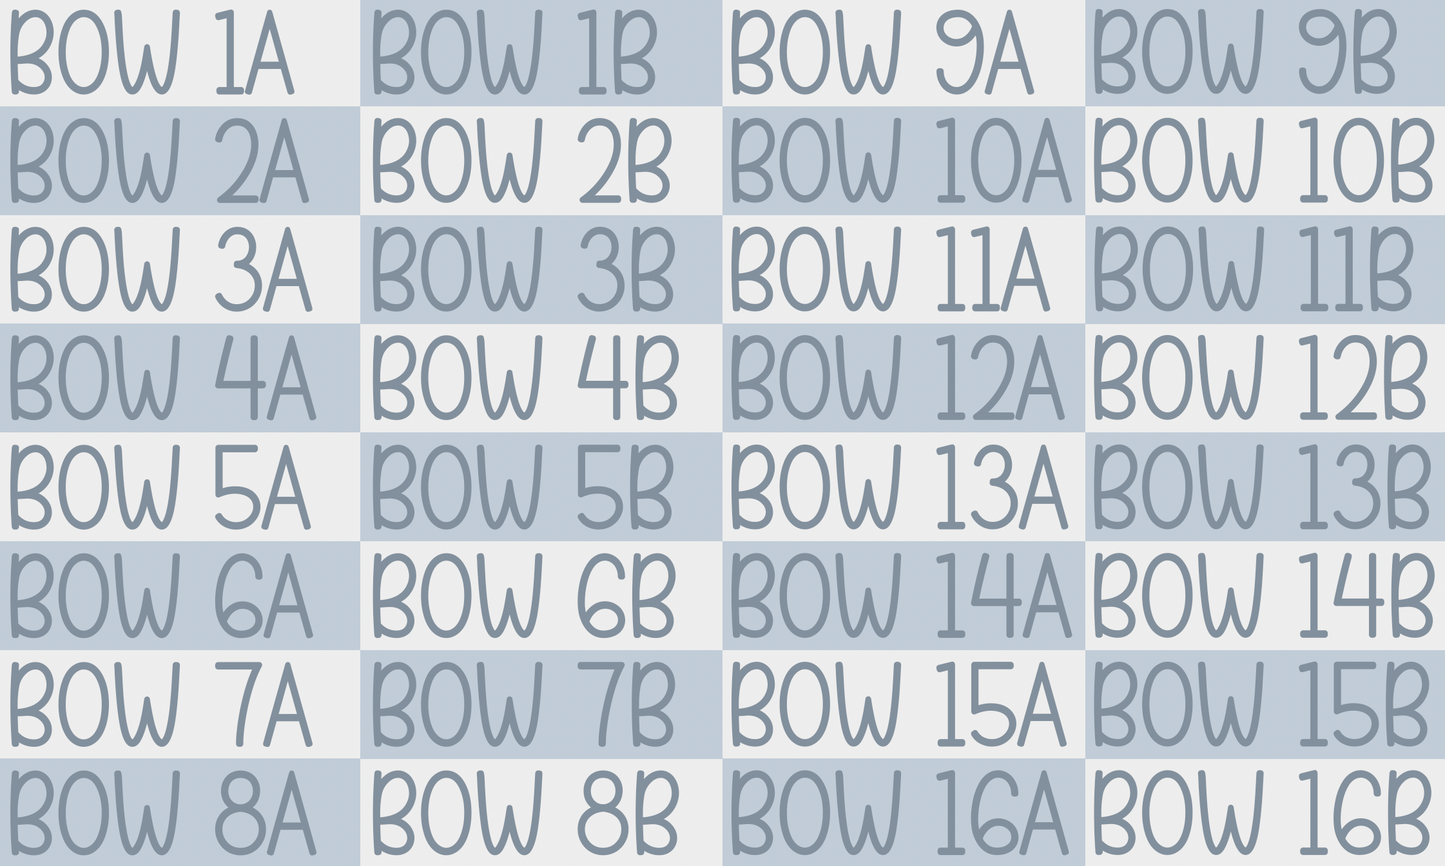 Multi-File 32-in-1 (Two-Tone Bows Split) Yard File